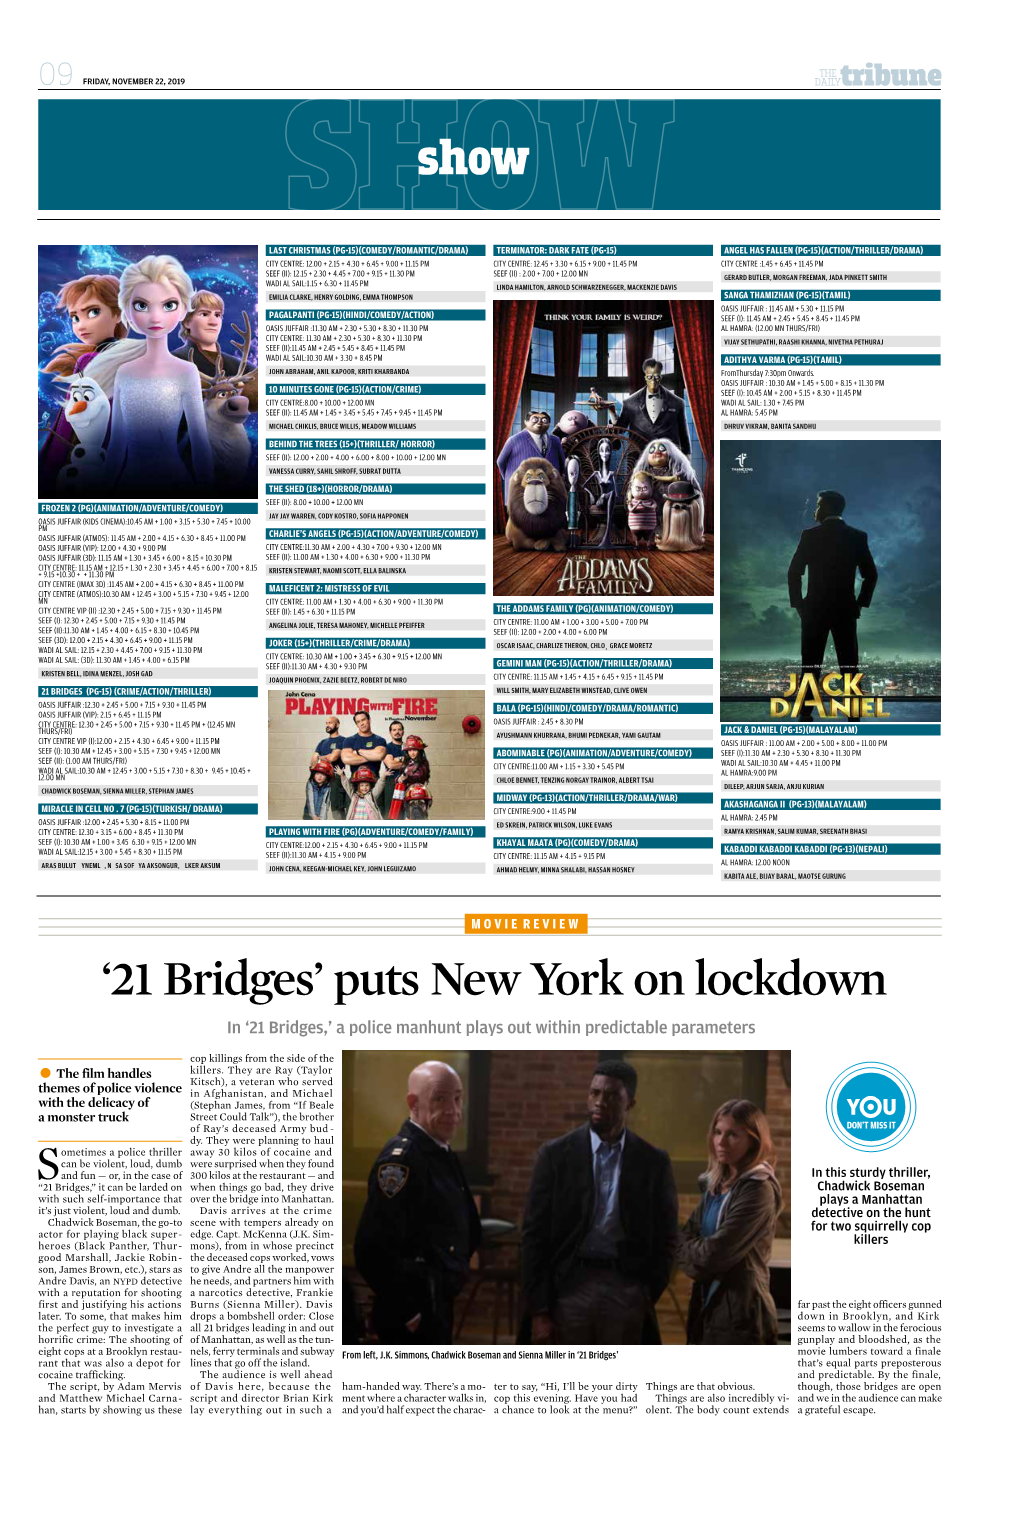 '21 Bridges' Puts New York on Lockdown